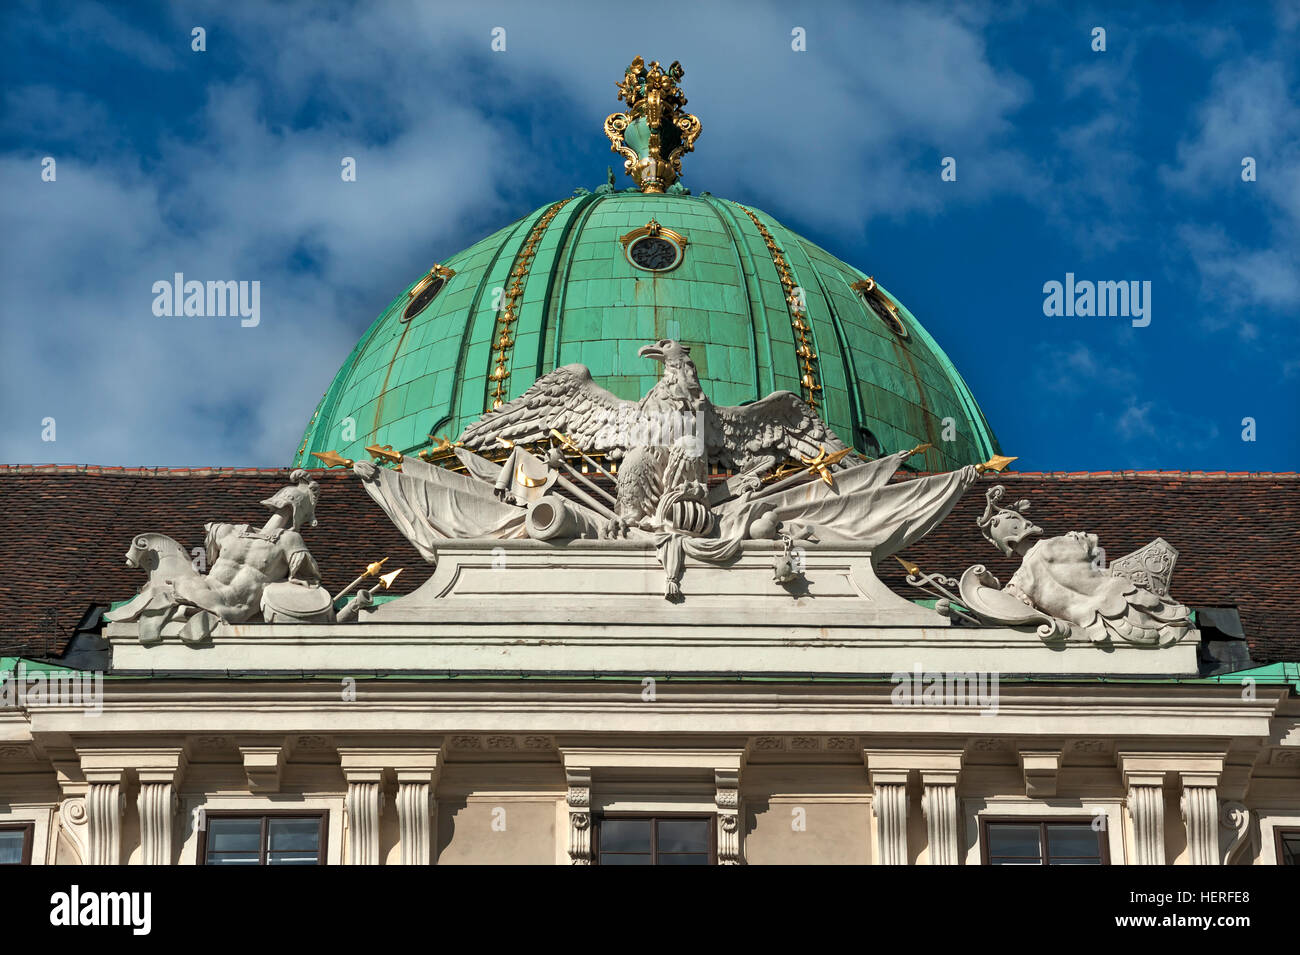 St Michael's Wing dome, Hofburg Palace, Vienna, Austria Stock Photo